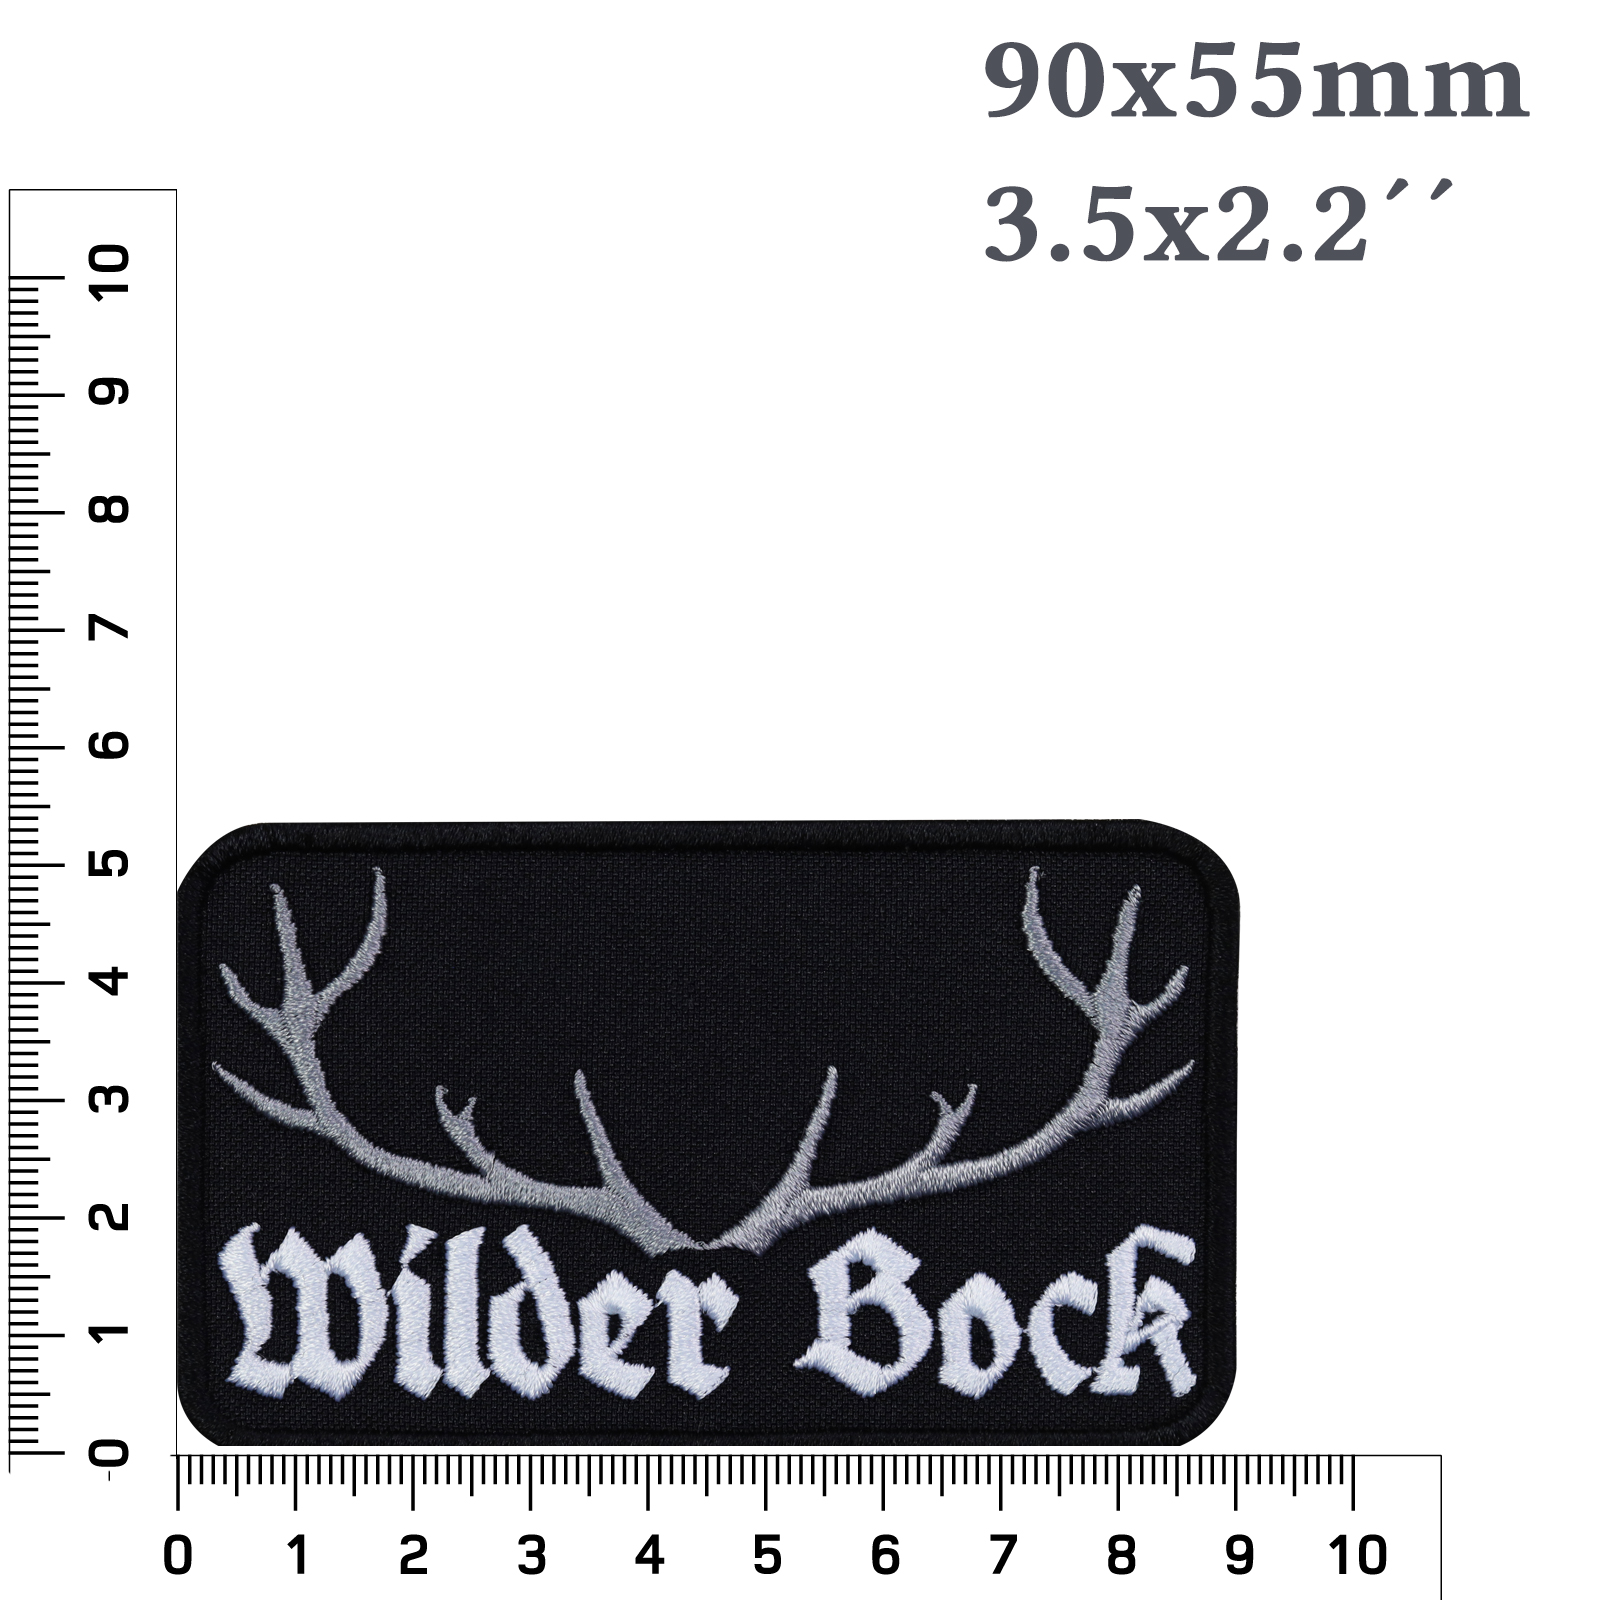 Wilder Bock - Patch